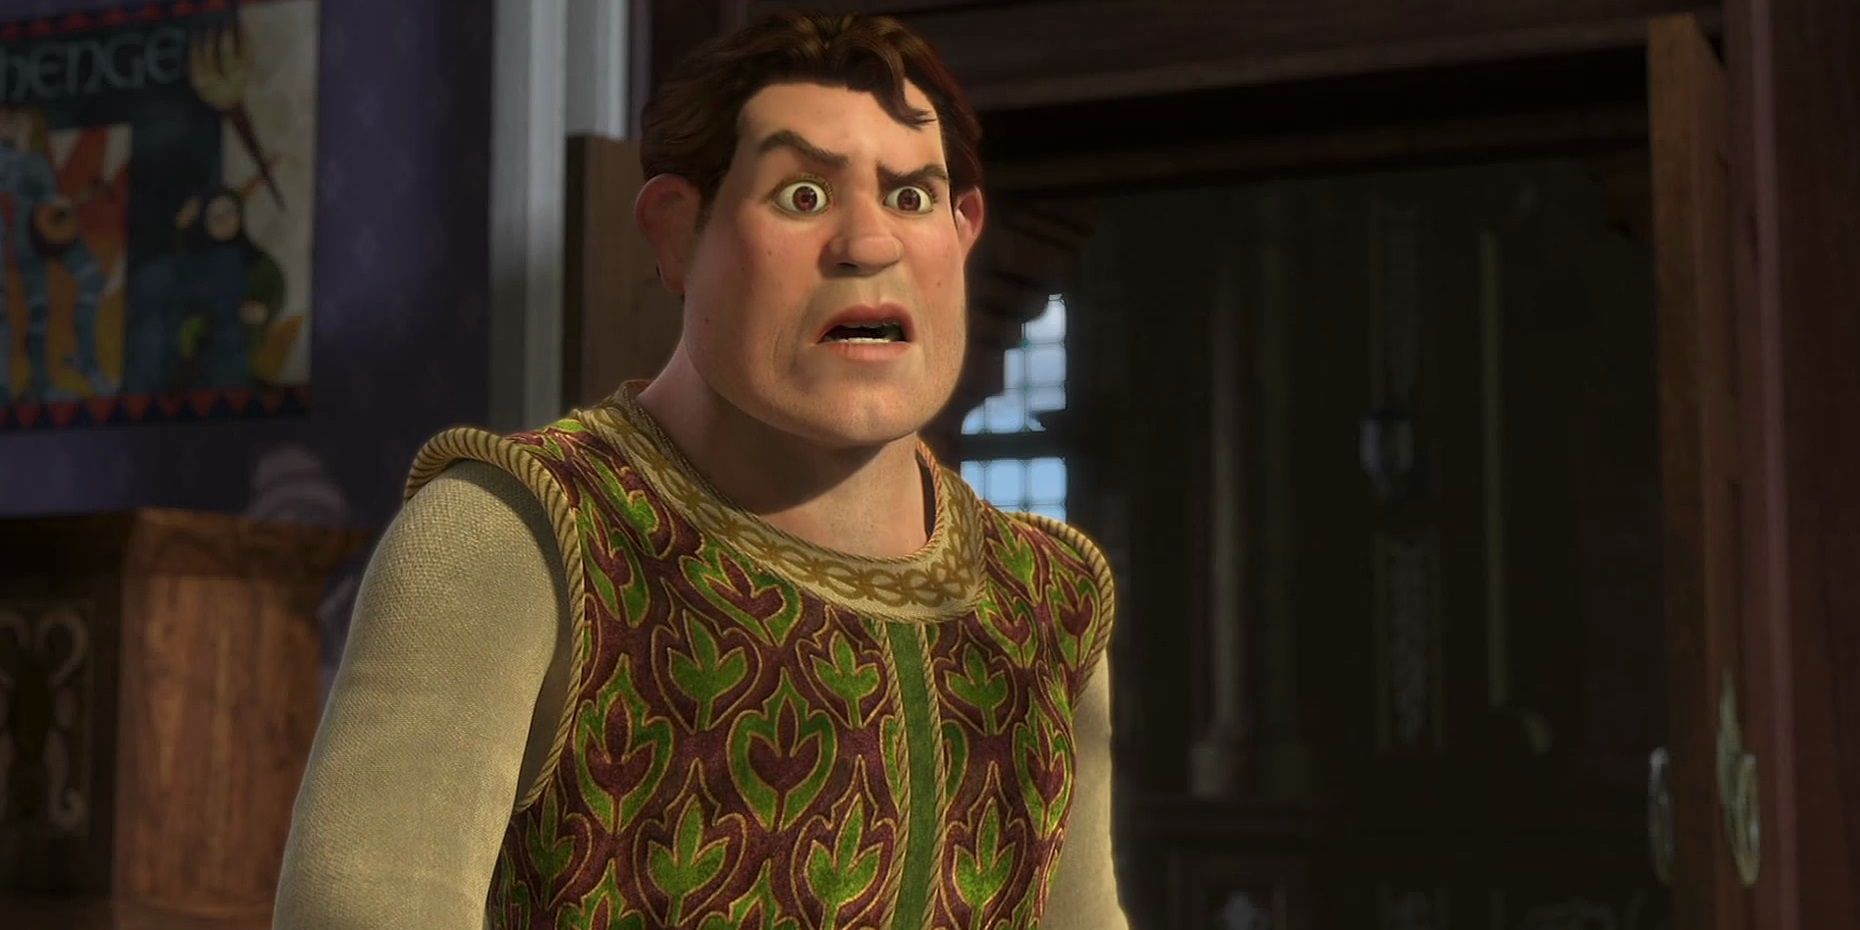 A human Shrek wearing a shocked expression.